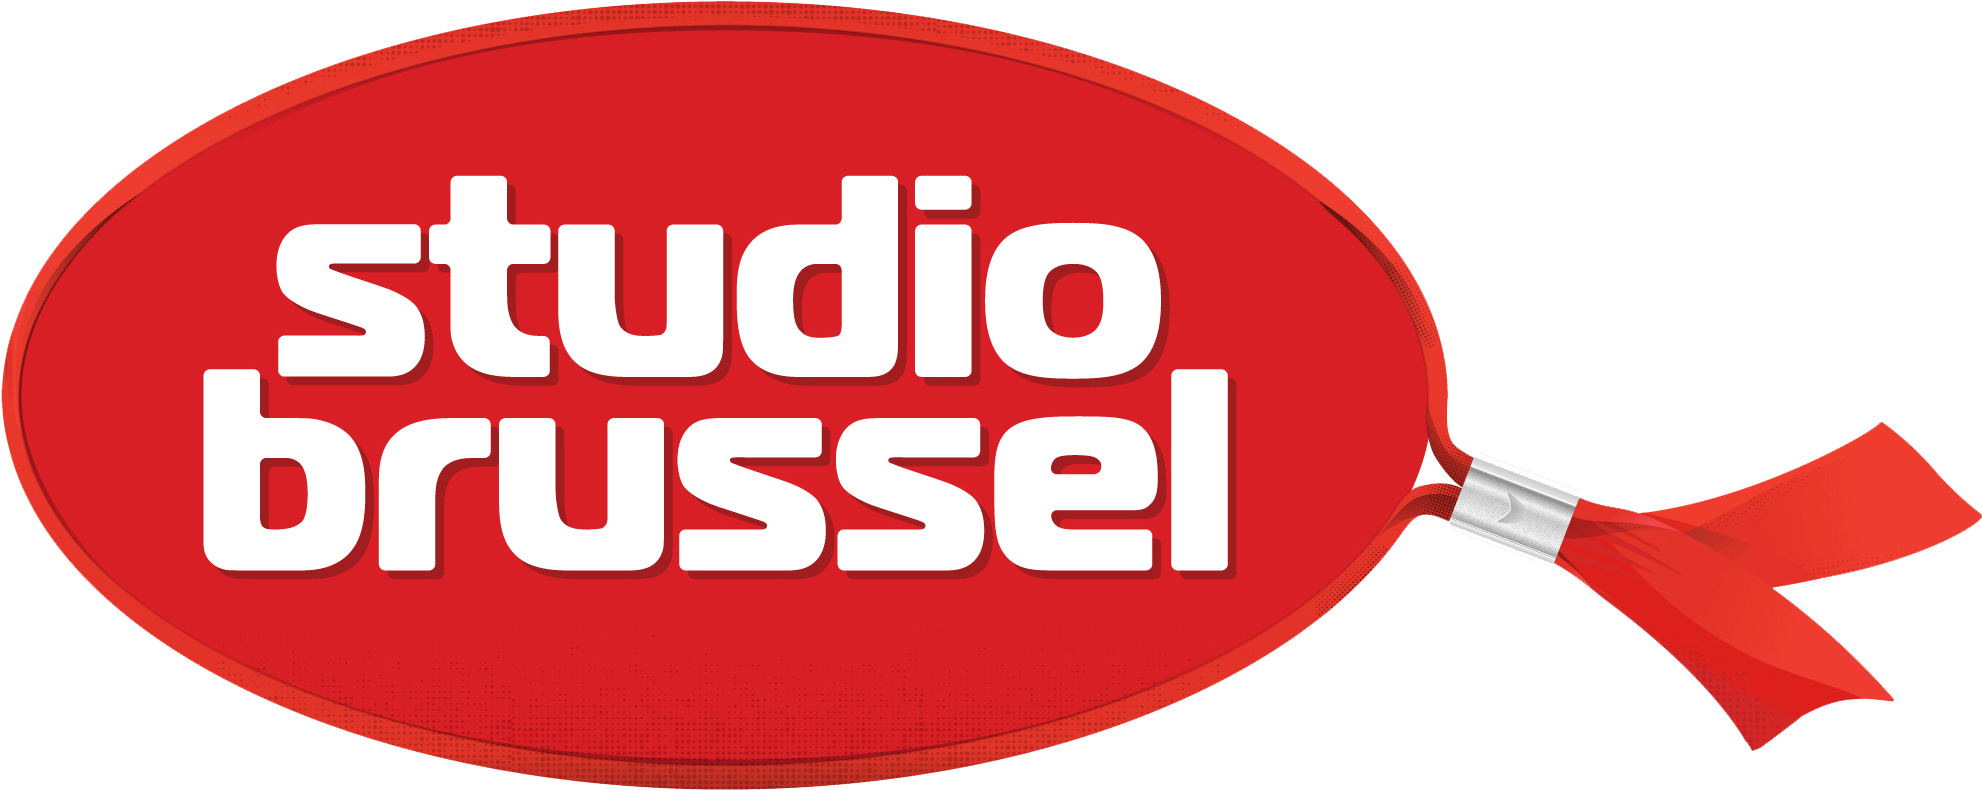 Startpagina Studio Brussel - Music For Life 2010 (1982x1249)